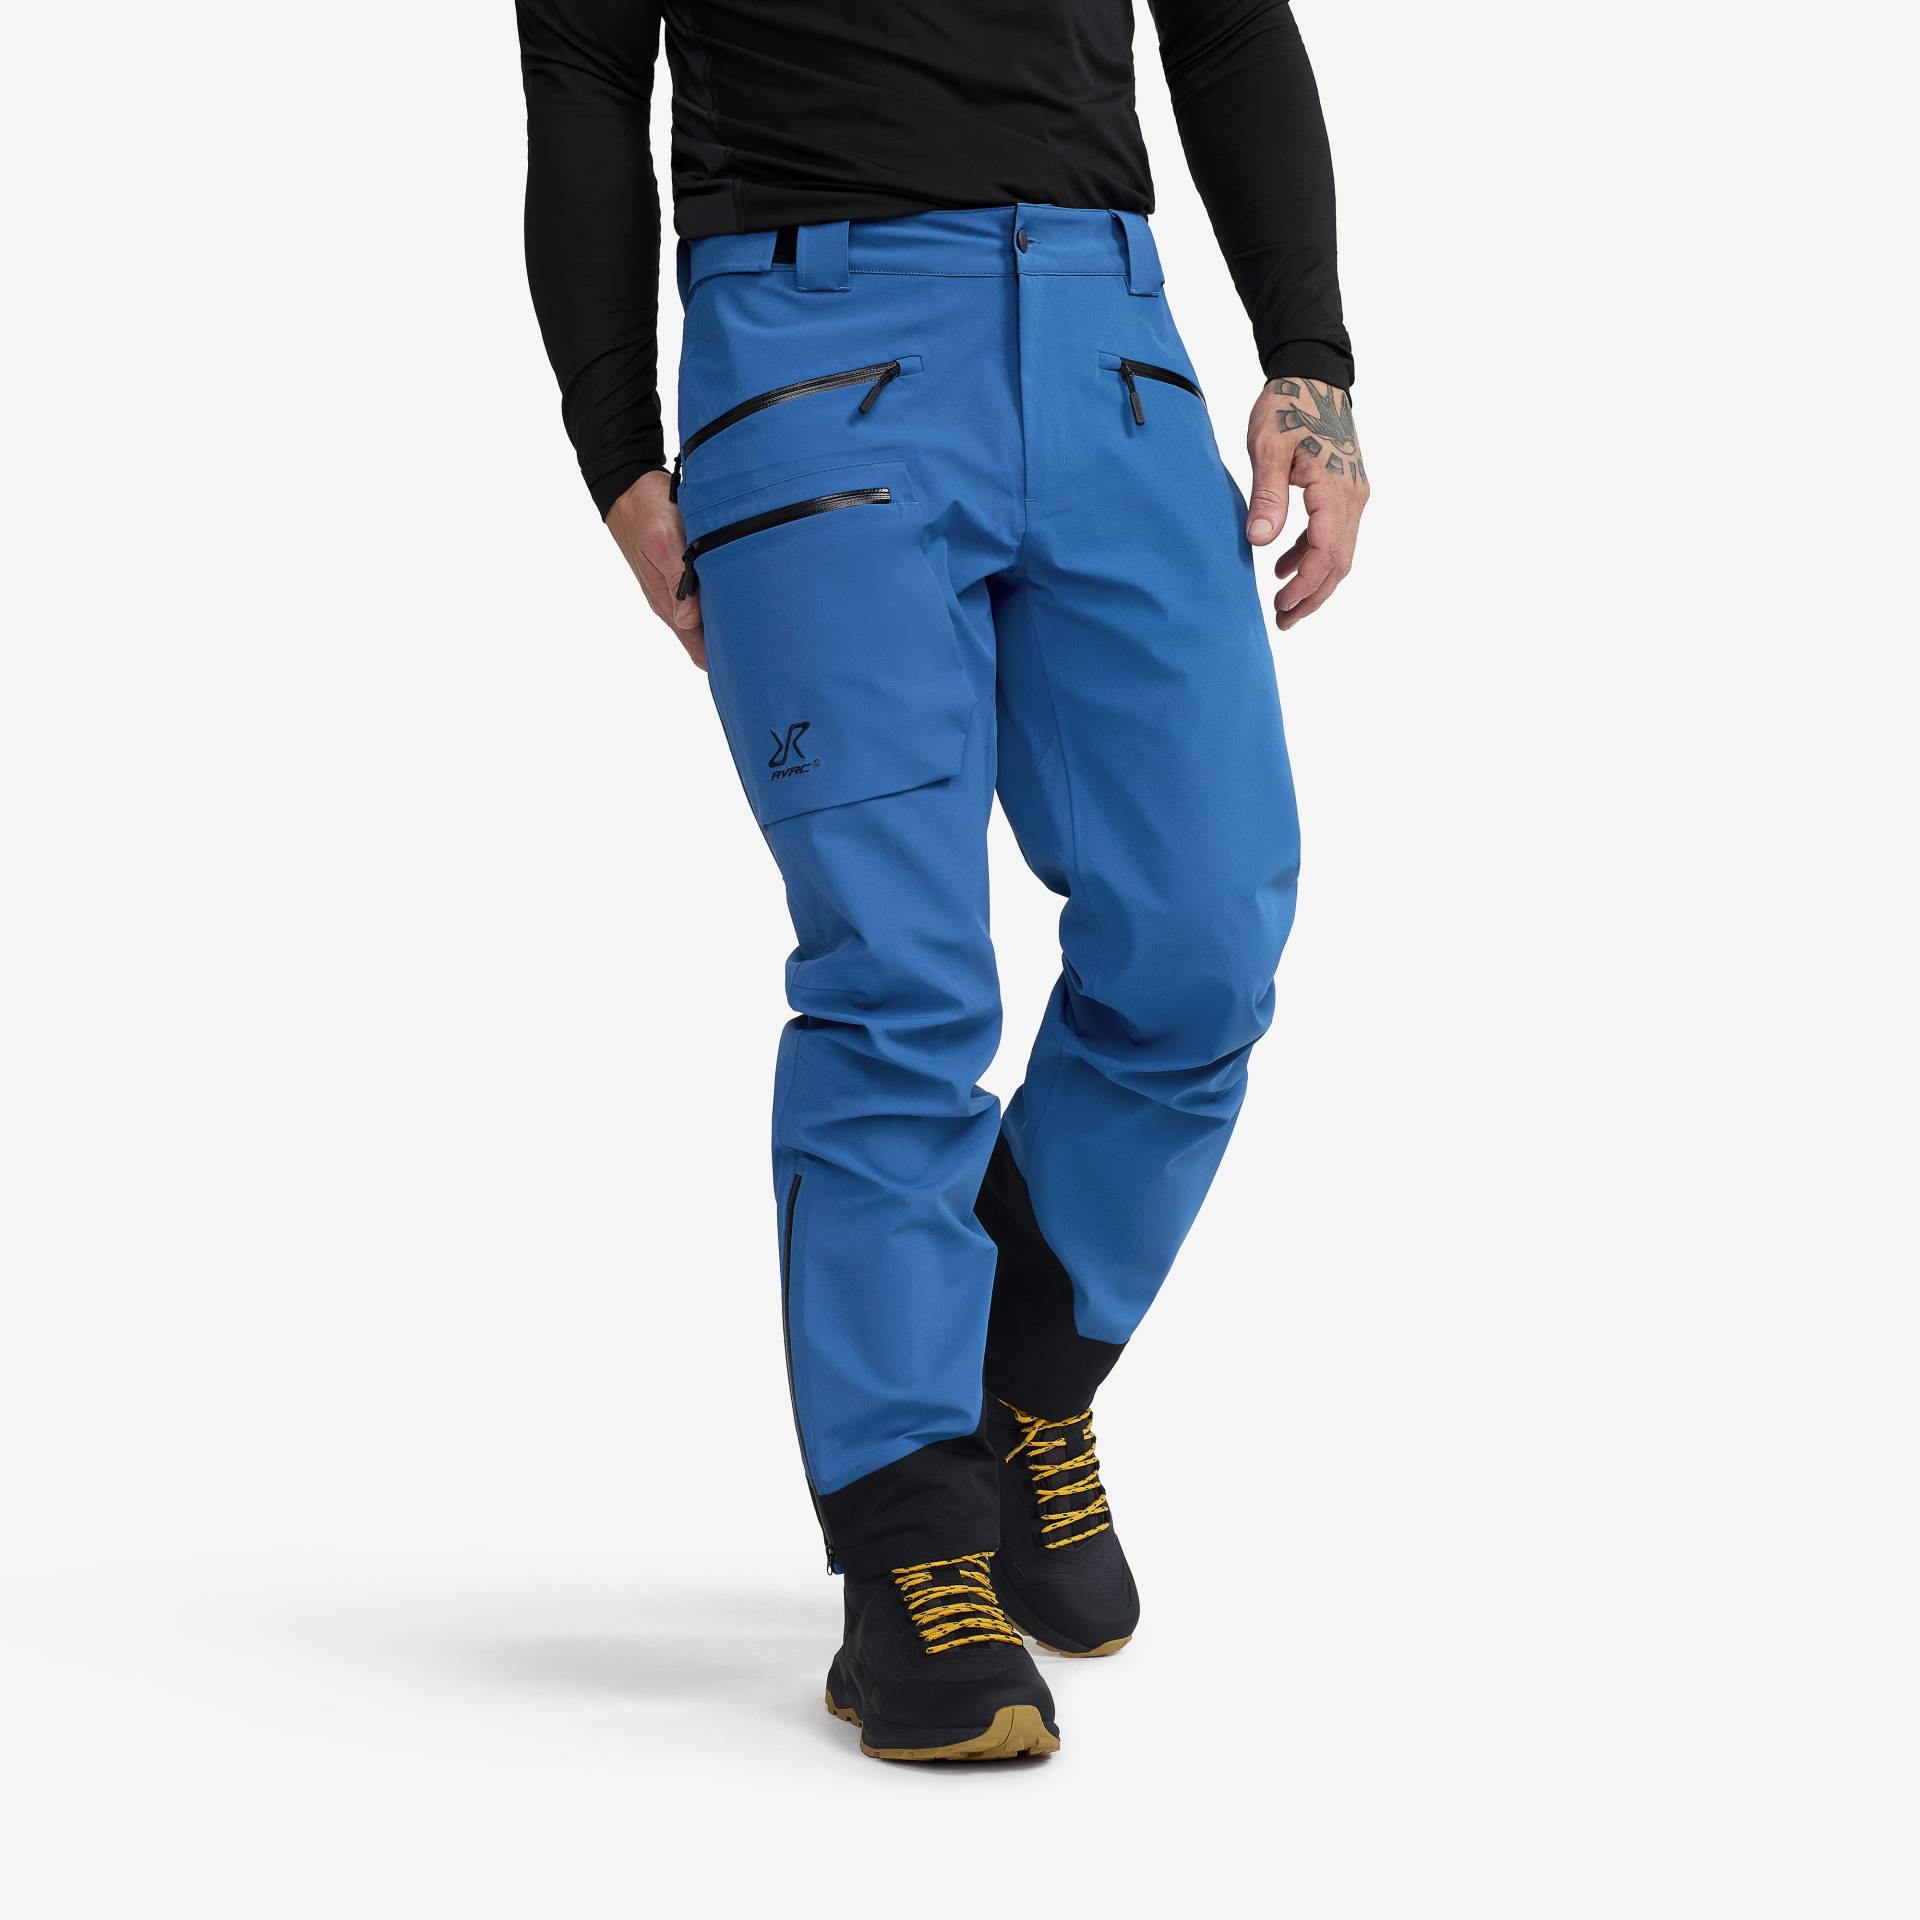 Aphex Pro Pants Herren Classic Blue, Größe:S - Outdoorhose, Wanderhose & Trekkinghose von RevolutionRace